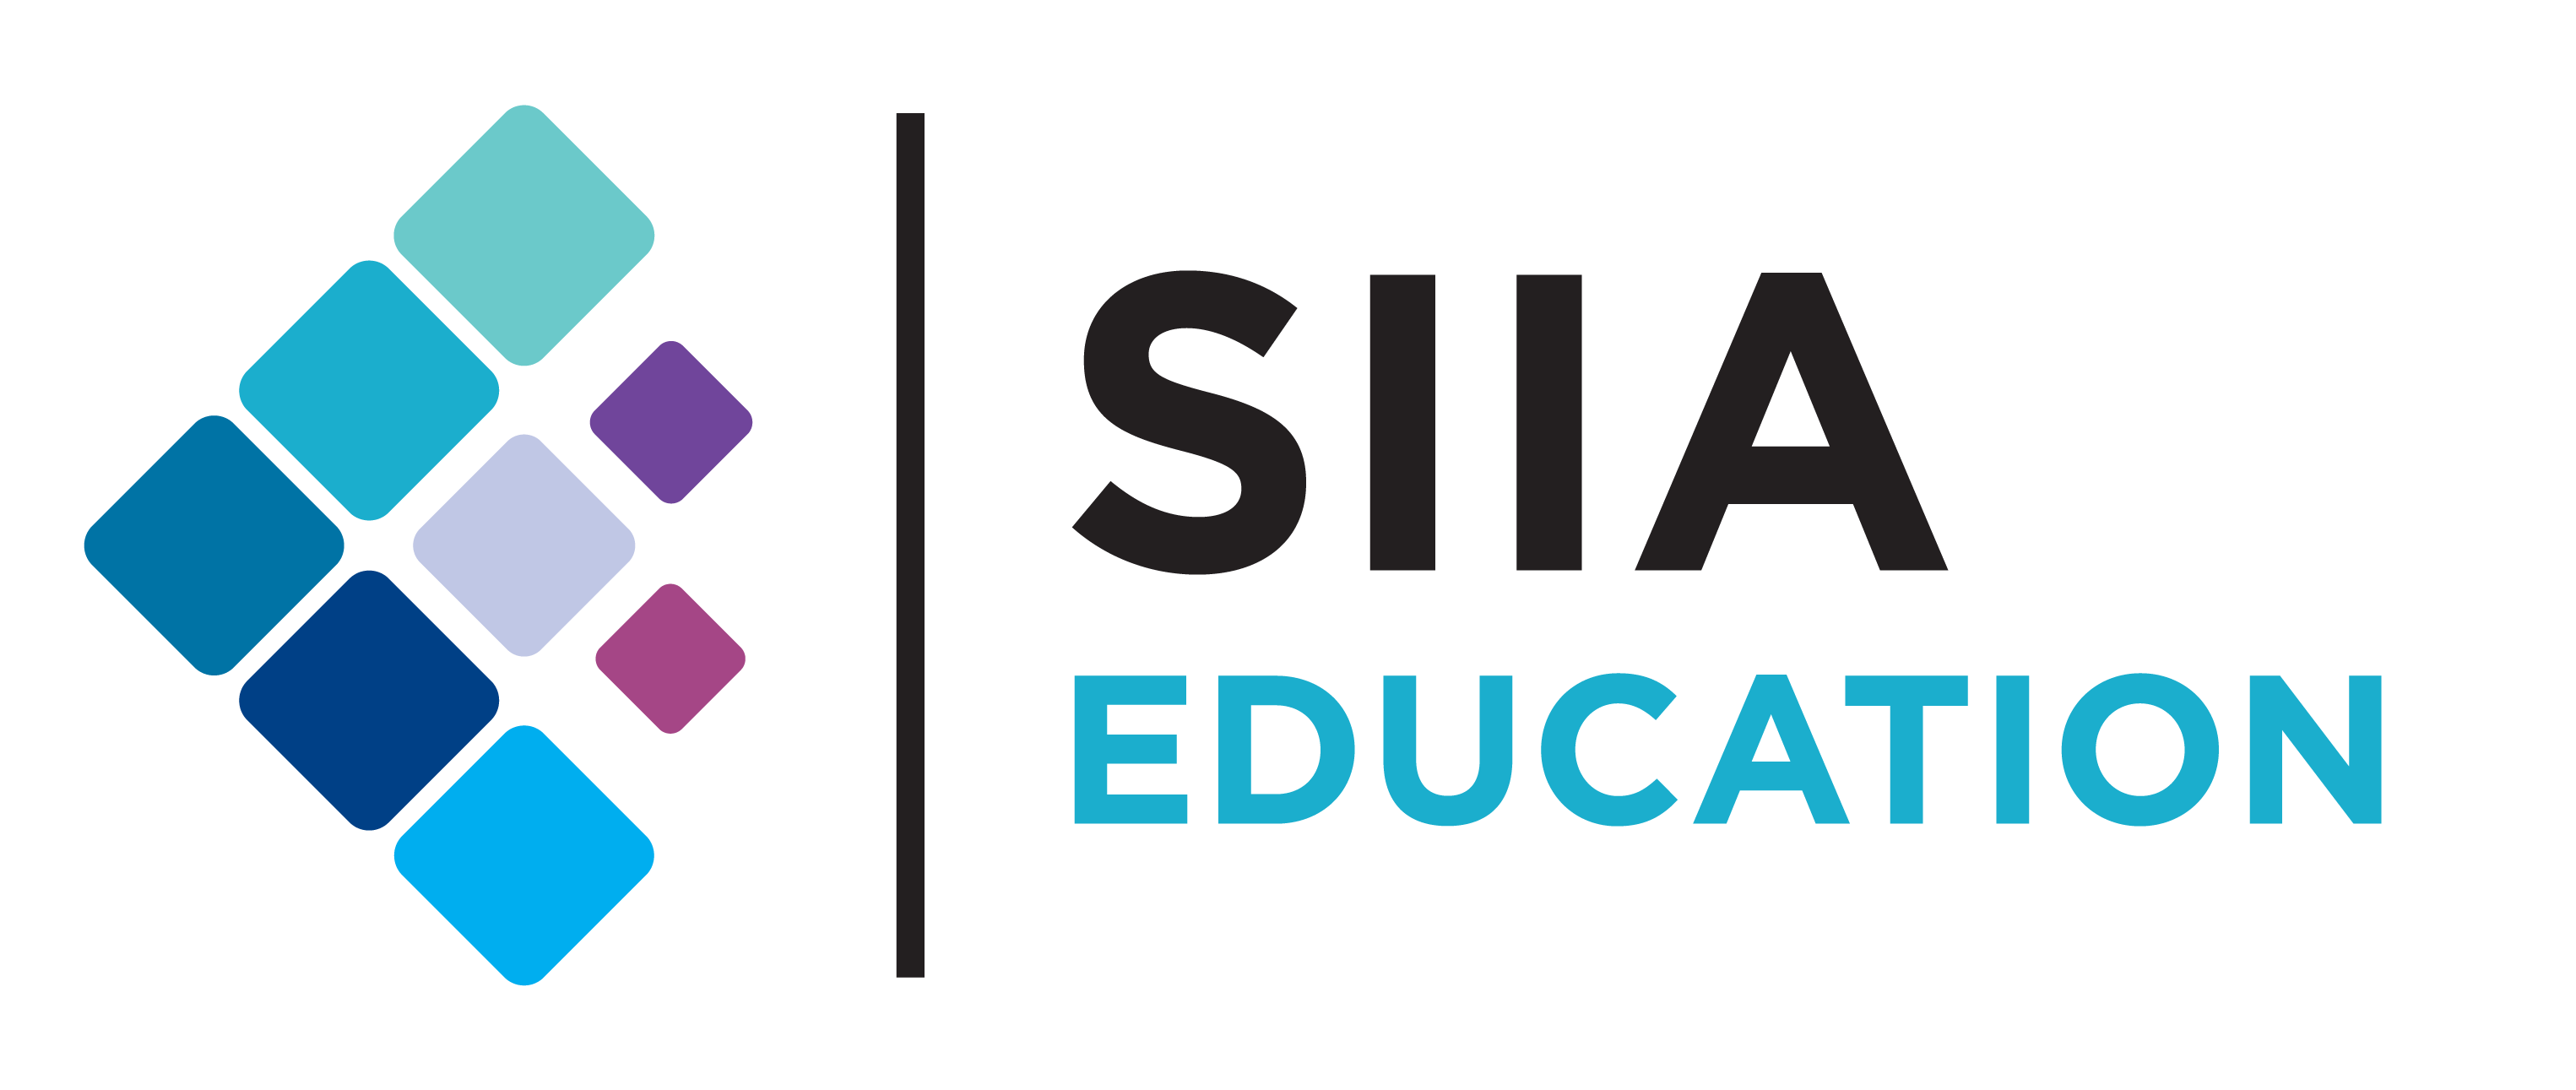 SIIA-logo_Education.png